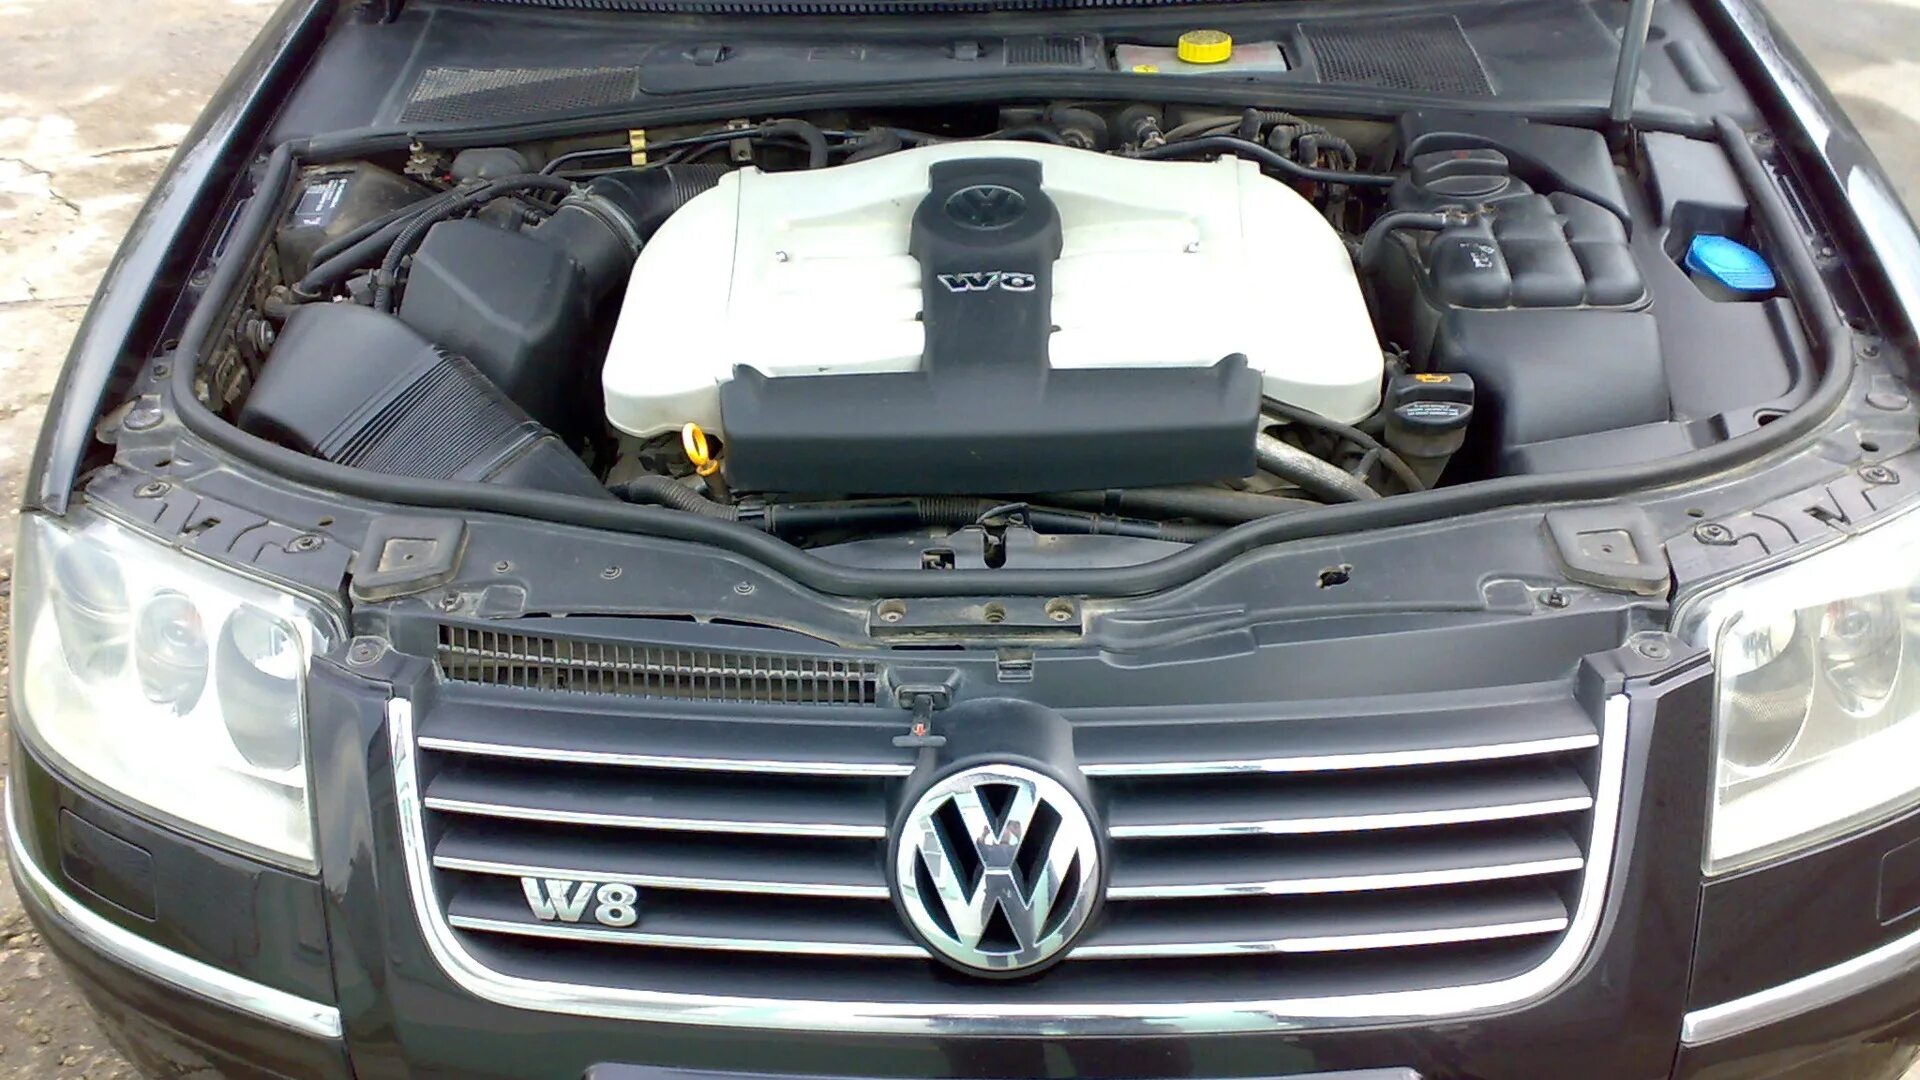 B 5 v5. Passat b5 w8. Passat b5 4.0 w8. Мотор w8 Passat b5. Volkswagen Passat двигатель w8.